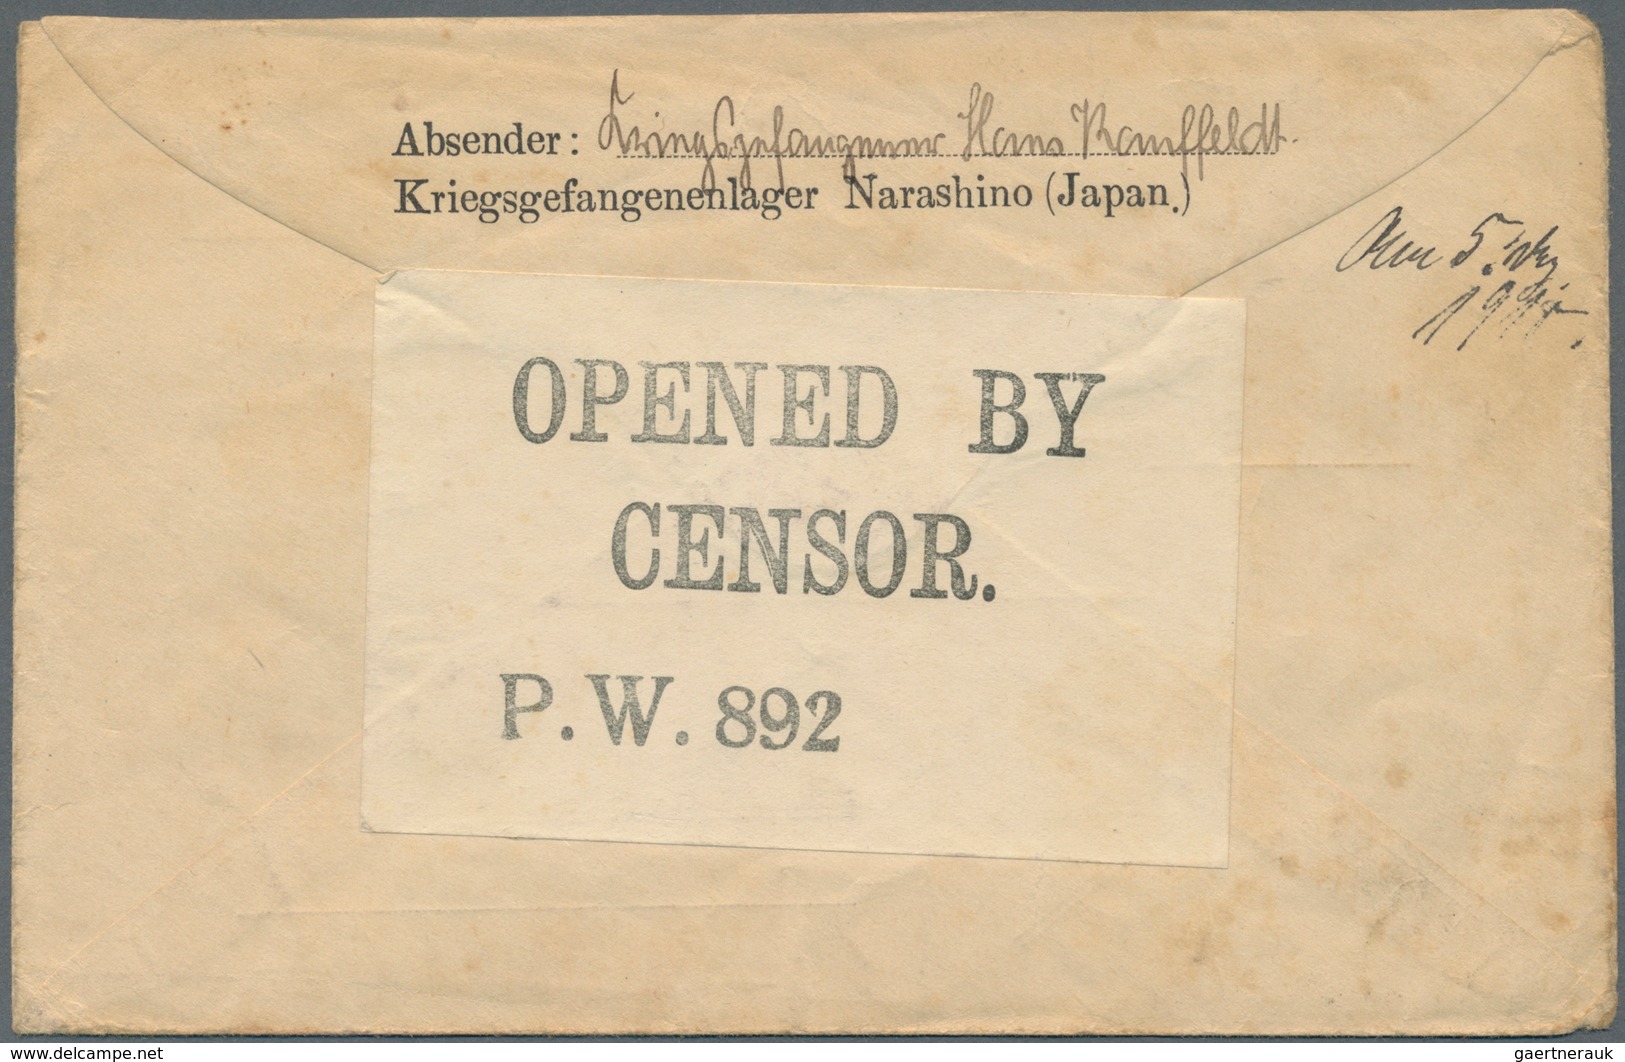 Lagerpost Tsingtau: Narashino, 1918/19, camp-made envelopes types I (top reduced), II, III. And a ca